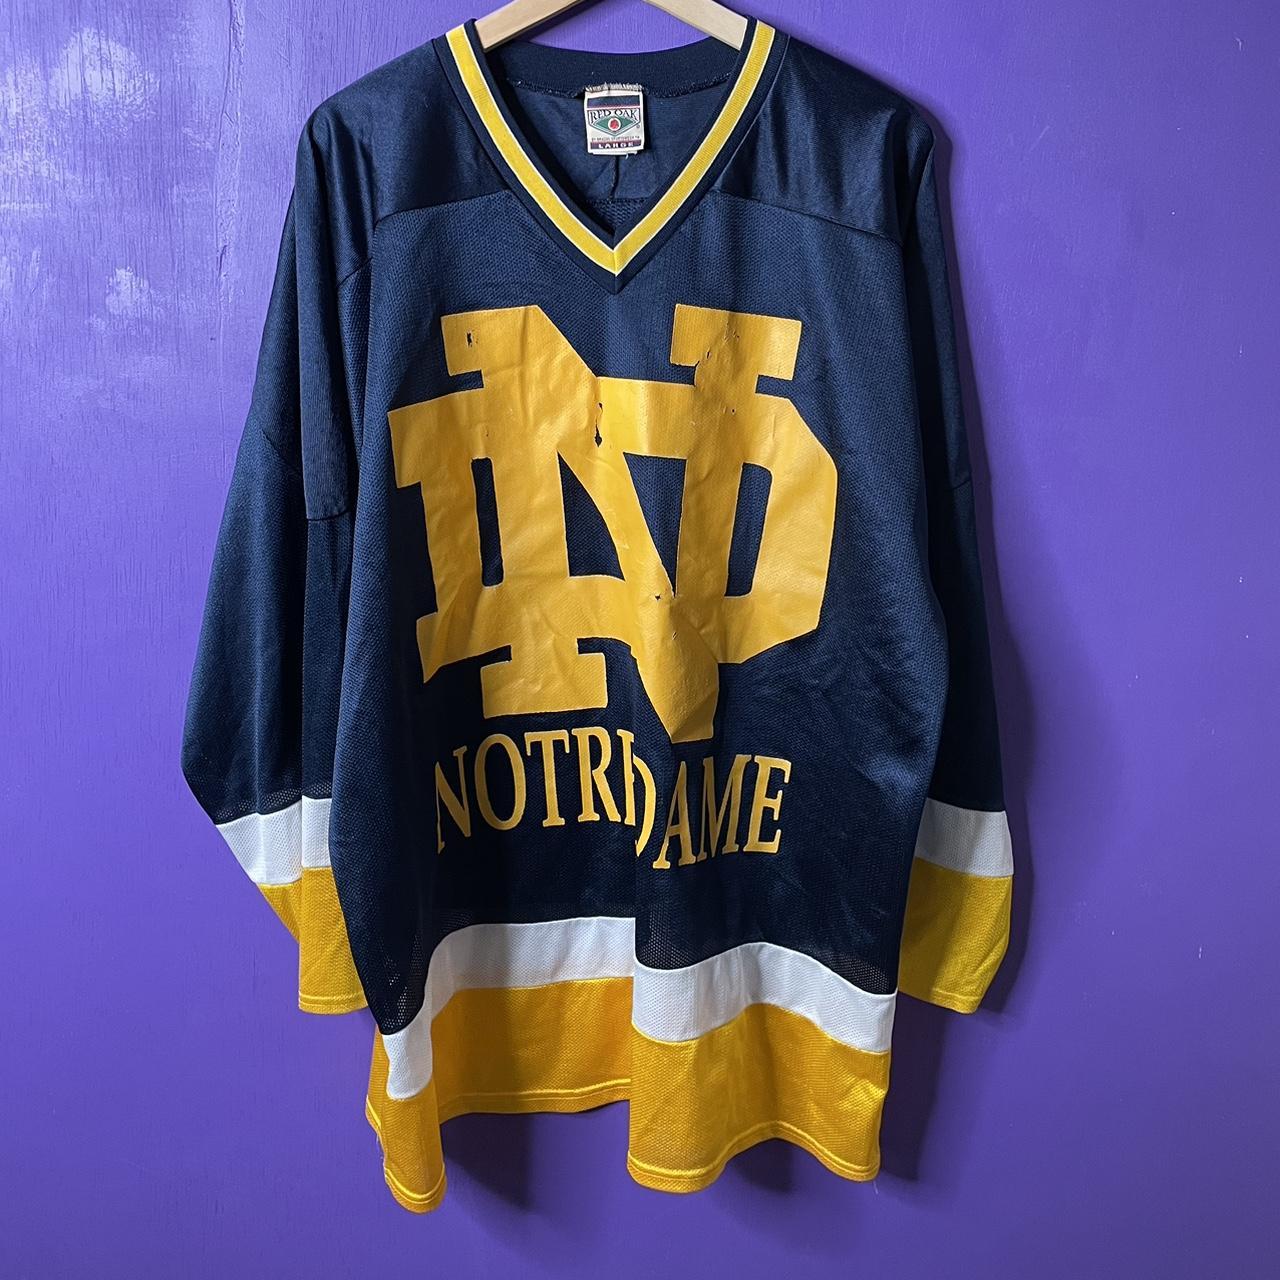 Sick Vintage 90s Notre Dame Hockey Jersey Made in - Depop